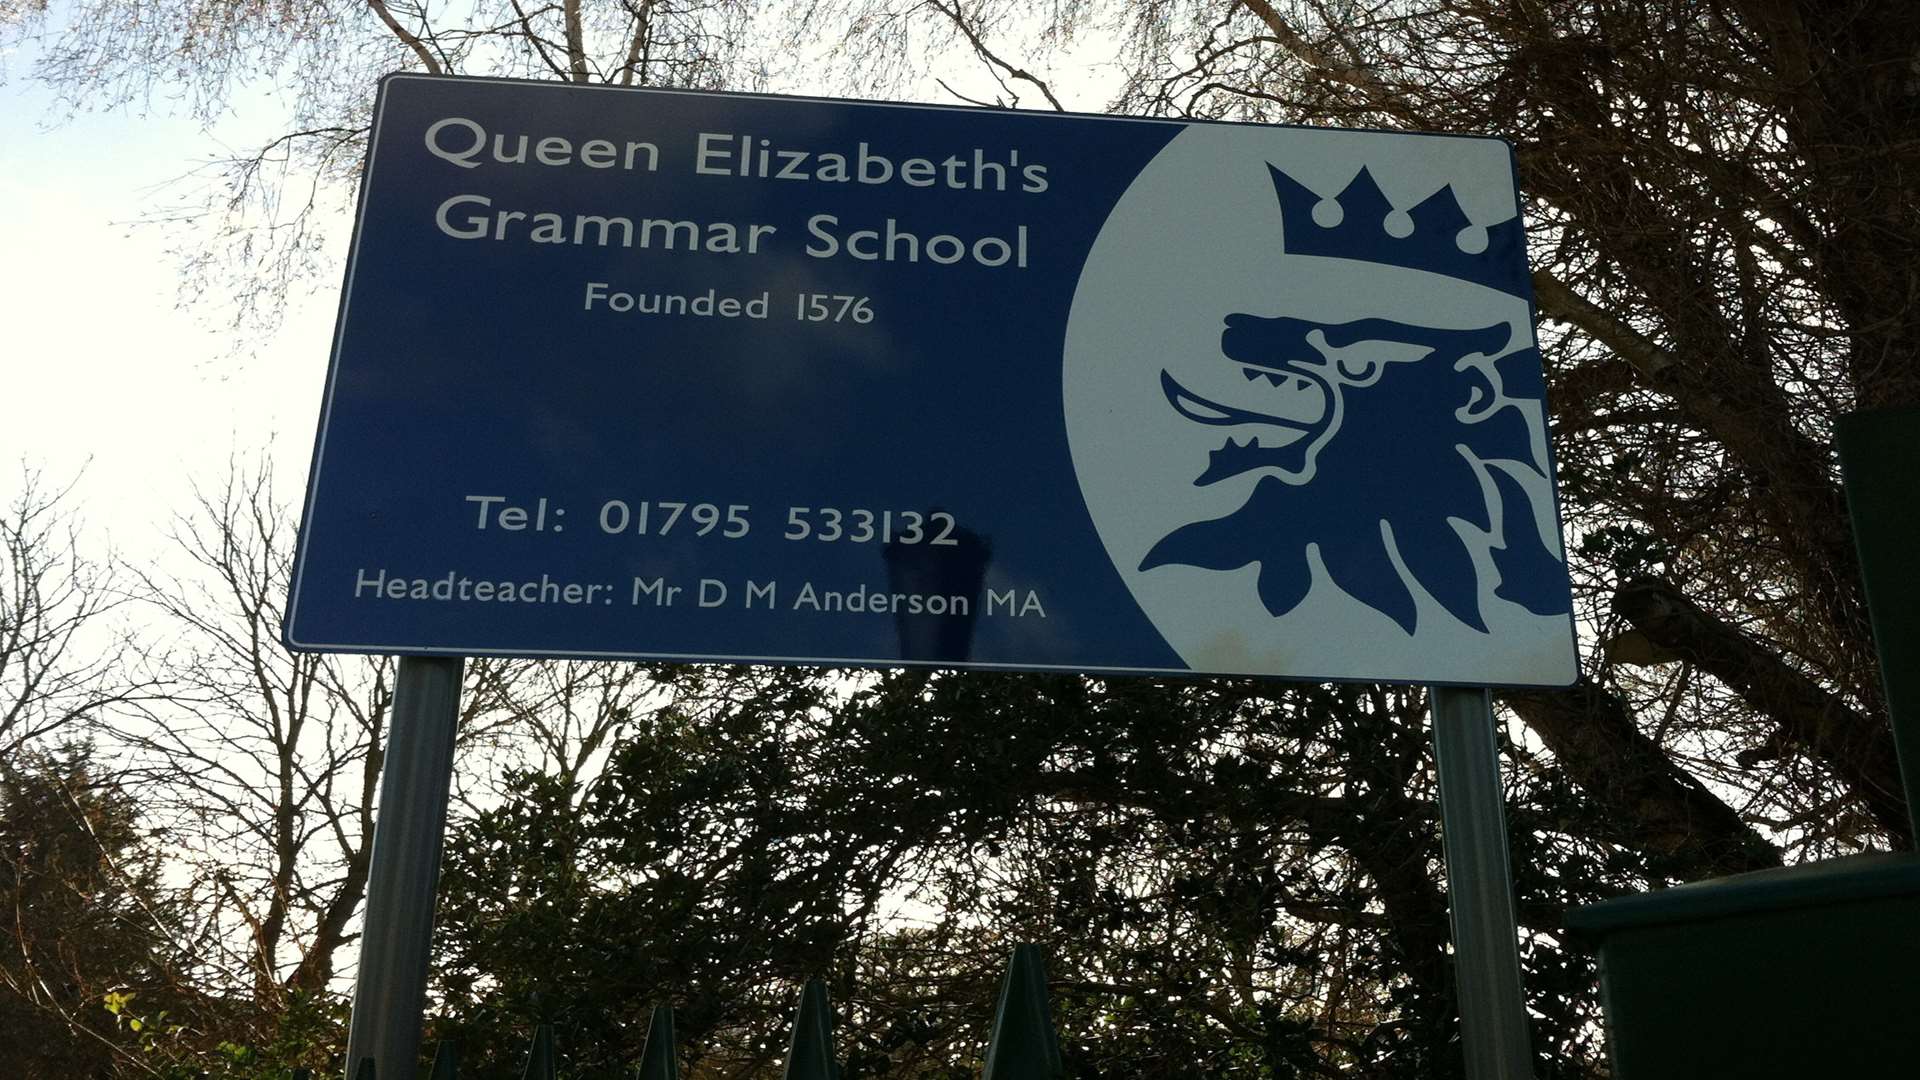 Queen Elizabeth's Grammar School in Faversham